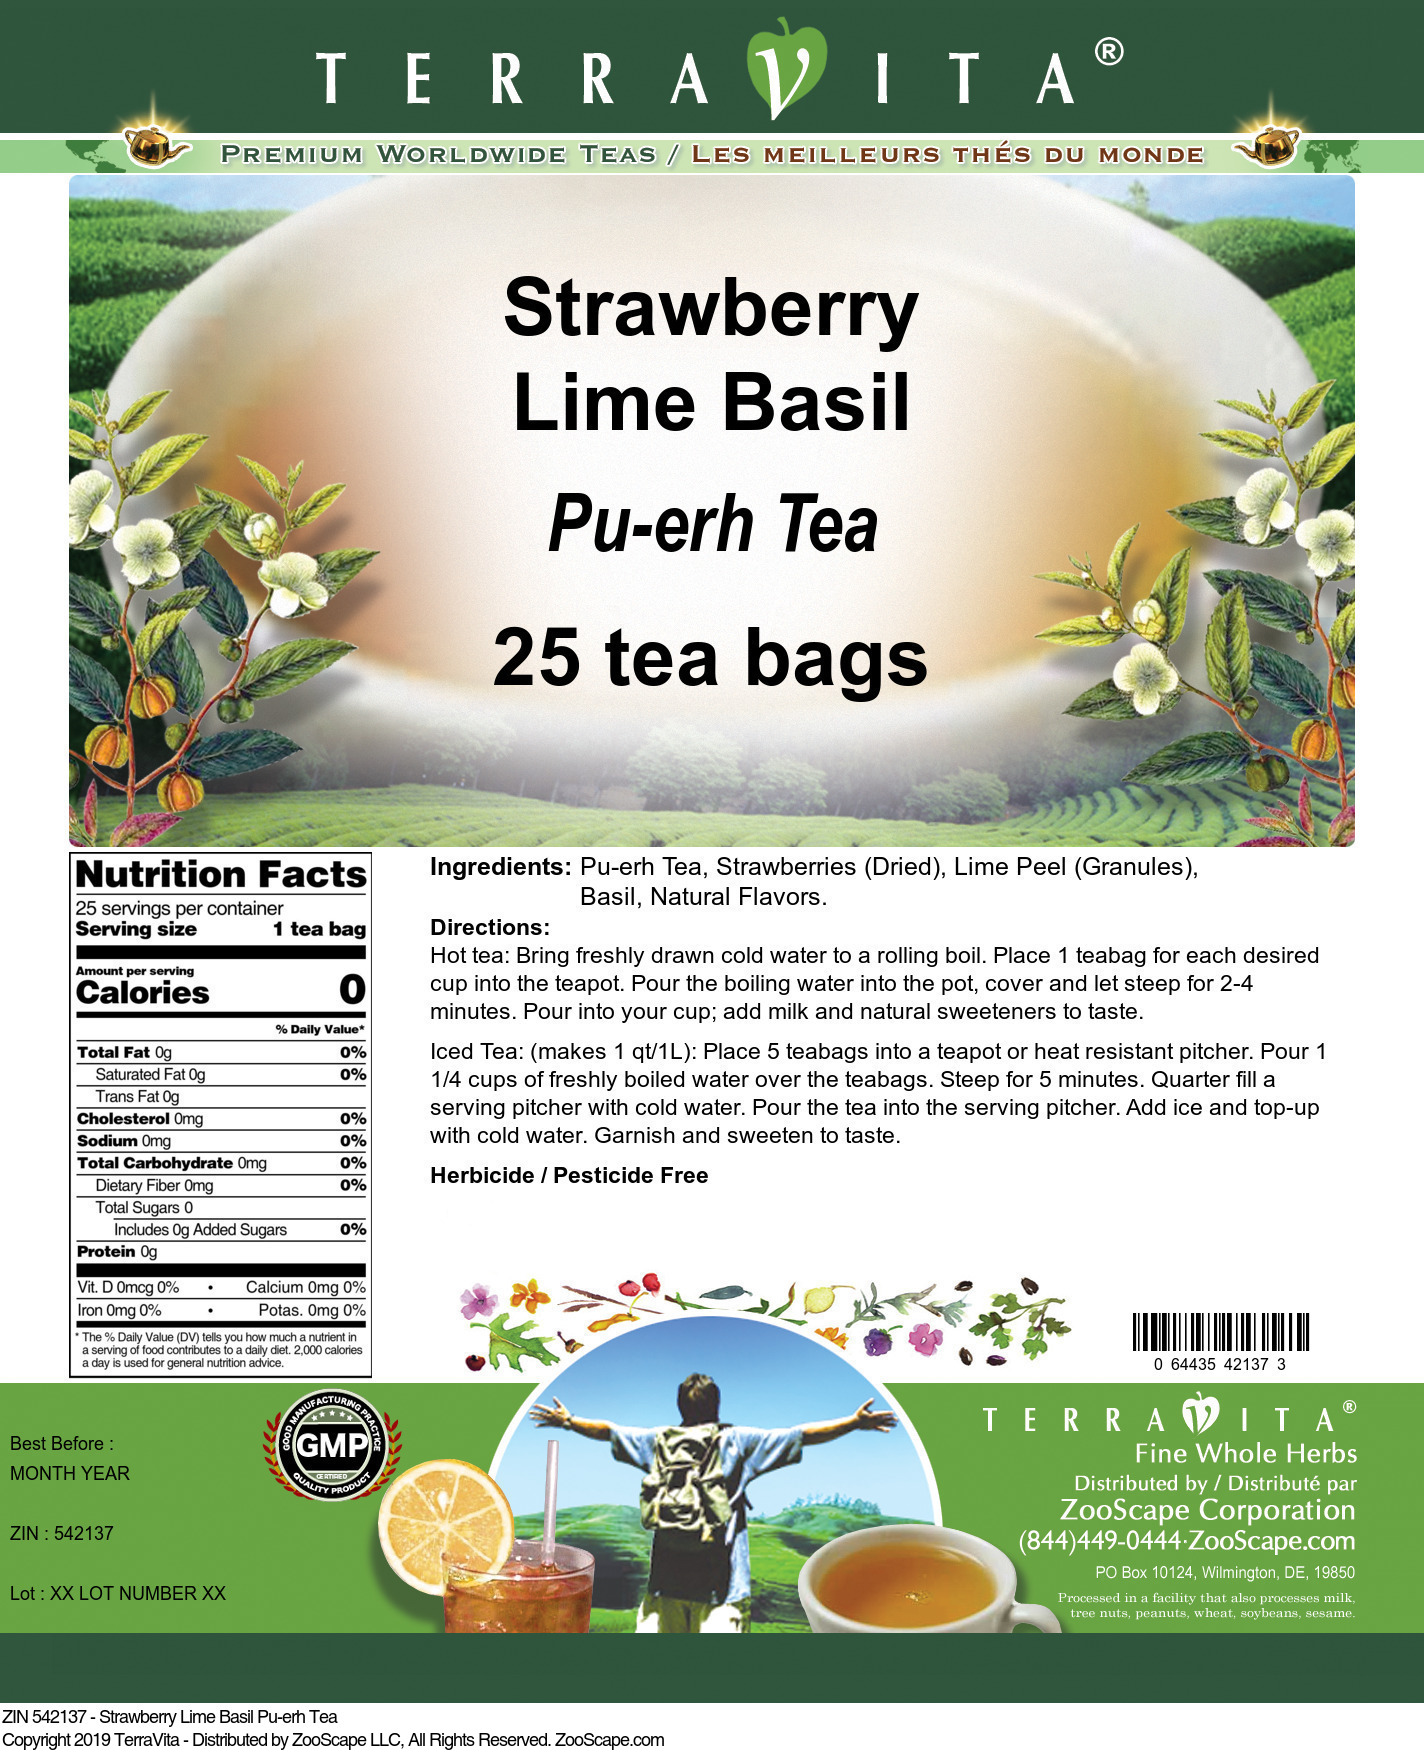 Strawberry Lime Basil Pu-erh Tea - Label